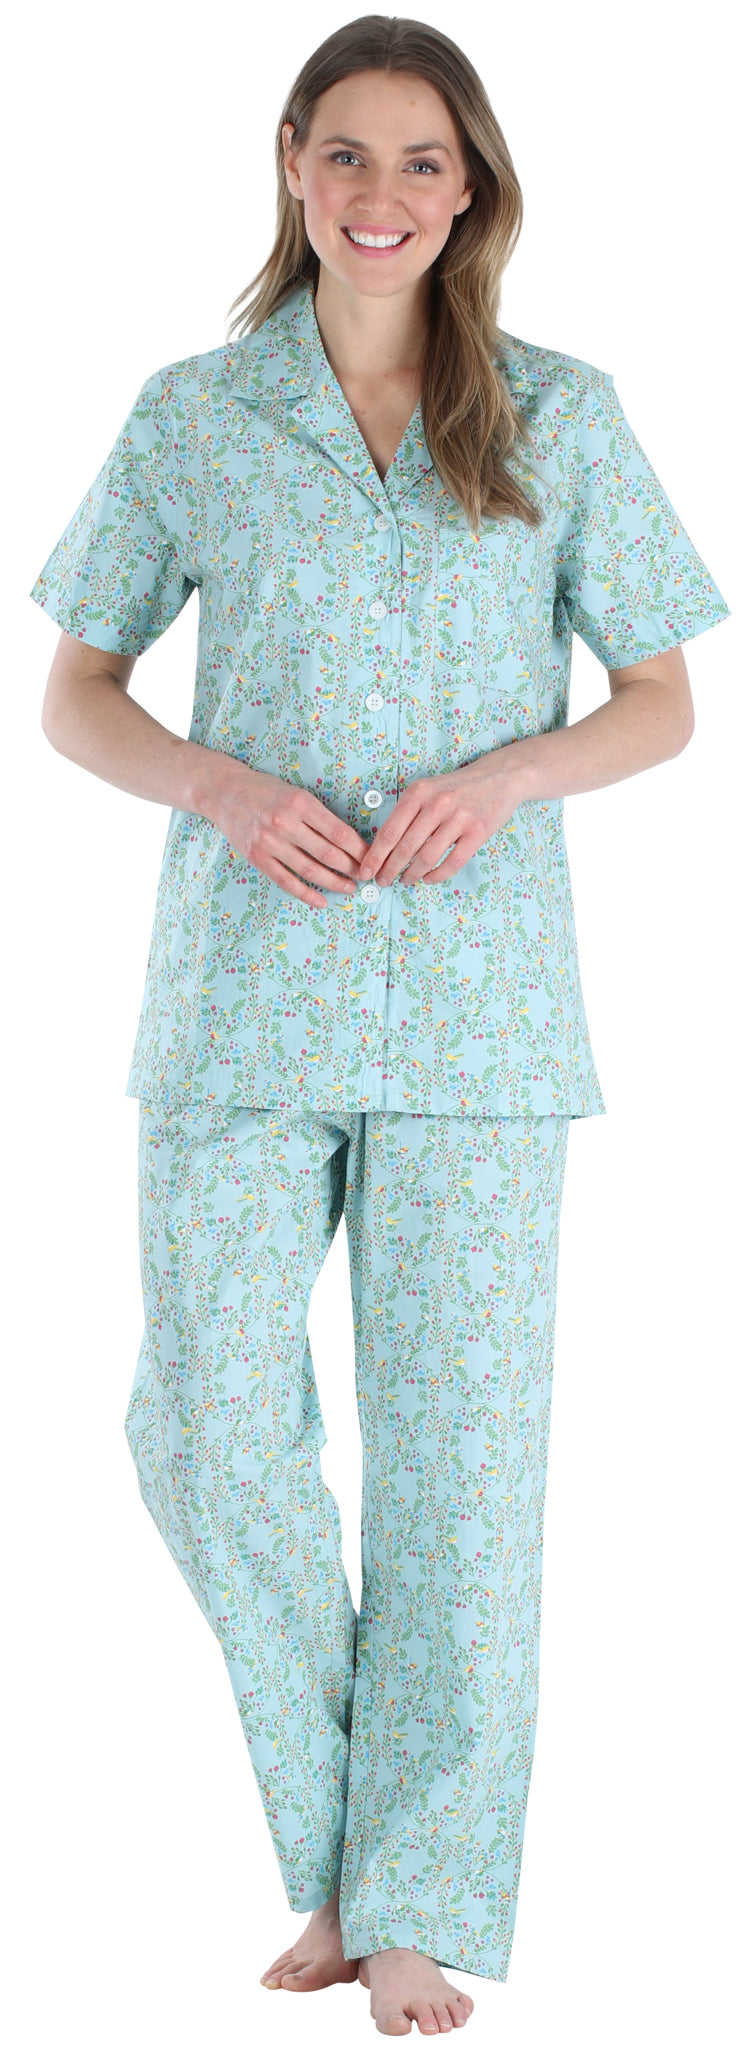 Women's Poplin Cotton Short Sleeve Button Up Top and Pants Pajama Set